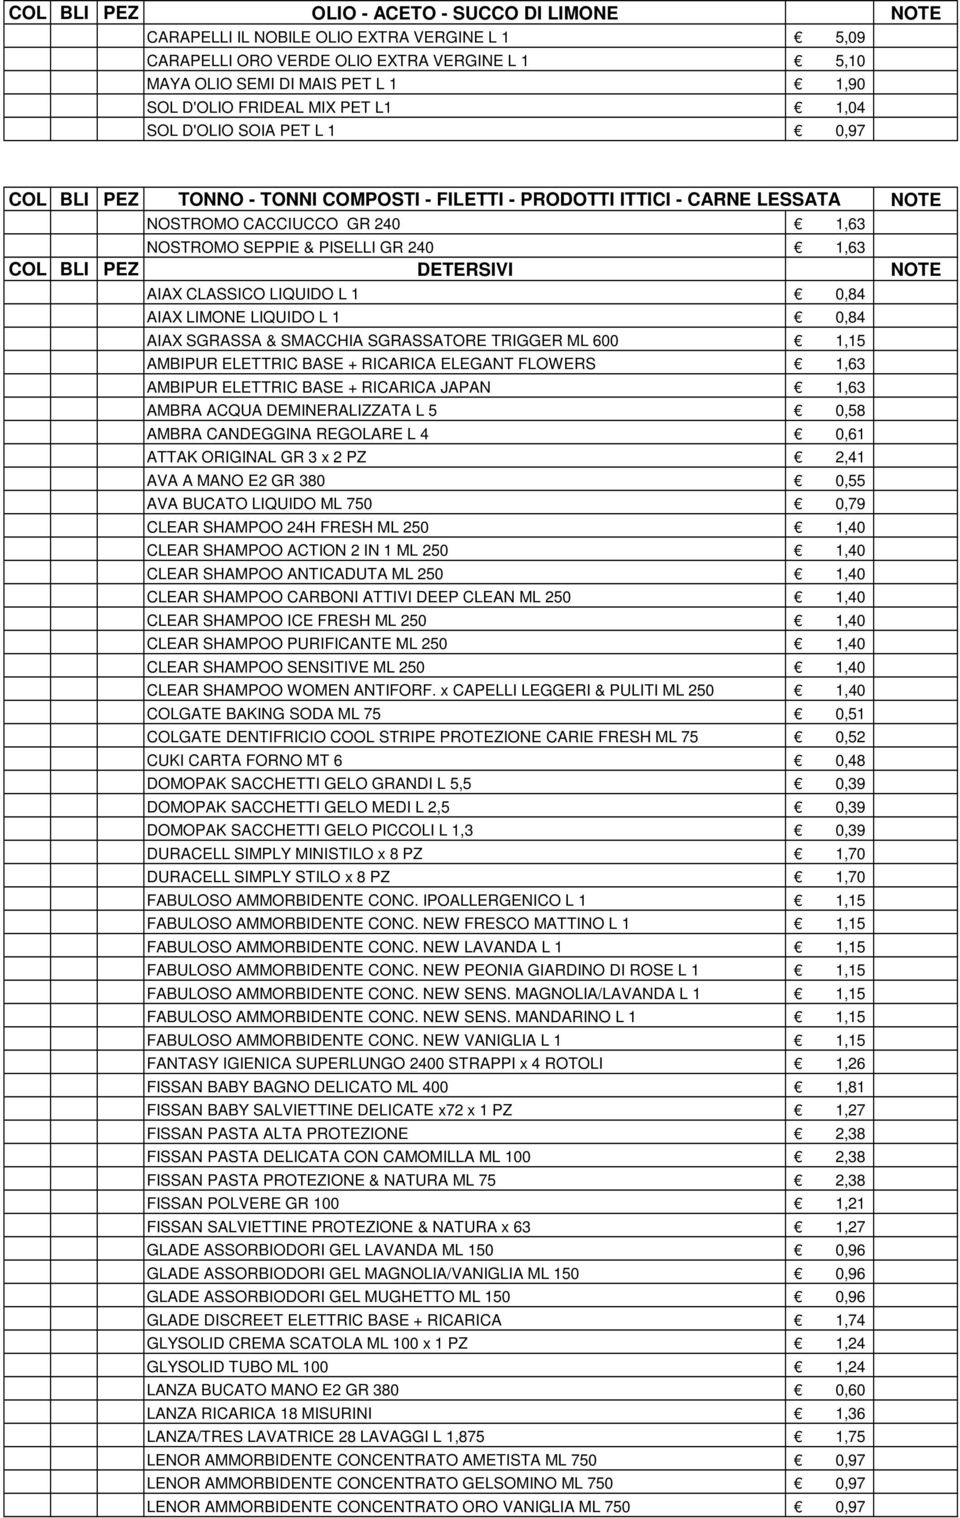 COL BLI PEZ DETERSIVI NOTE AIAX CLASSICO LIQUIDO L 1 0,84 AIAX LIMONE LIQUIDO L 1 0,84 AIAX SGRASSA & SMACCHIA SGRASSATORE TRIGGER ML 600 1,15 AMBIPUR ELETTRIC BASE + RICARICA ELEGANT FLOWERS 1,63